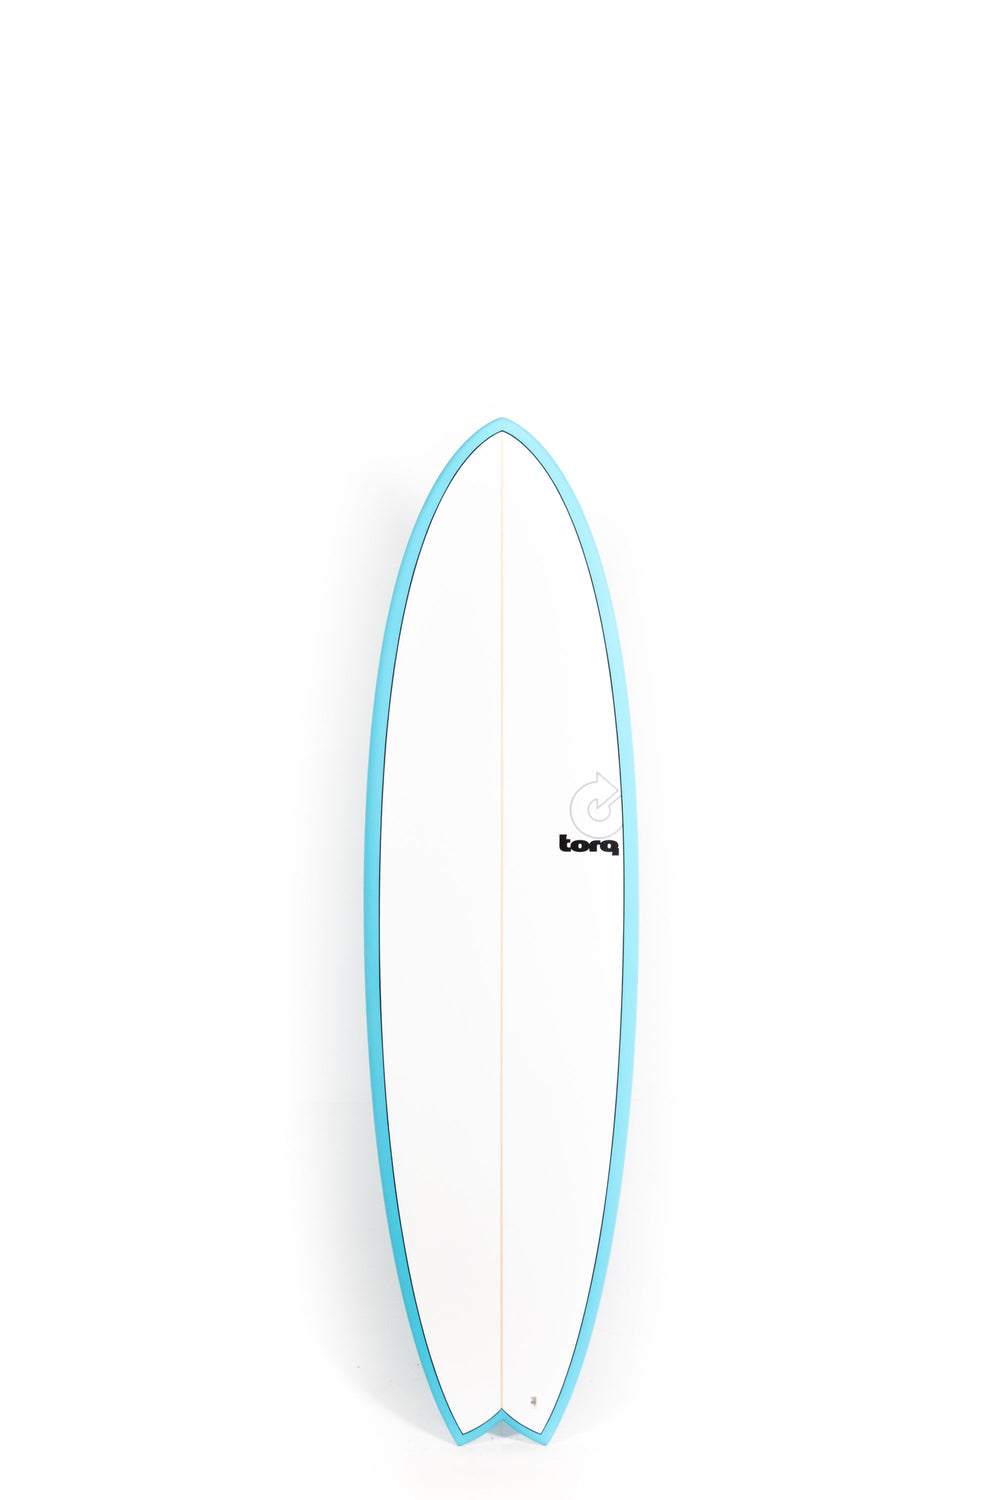 Pukas Surf Shop - Torq Surfboards - MODFISH - 6'6